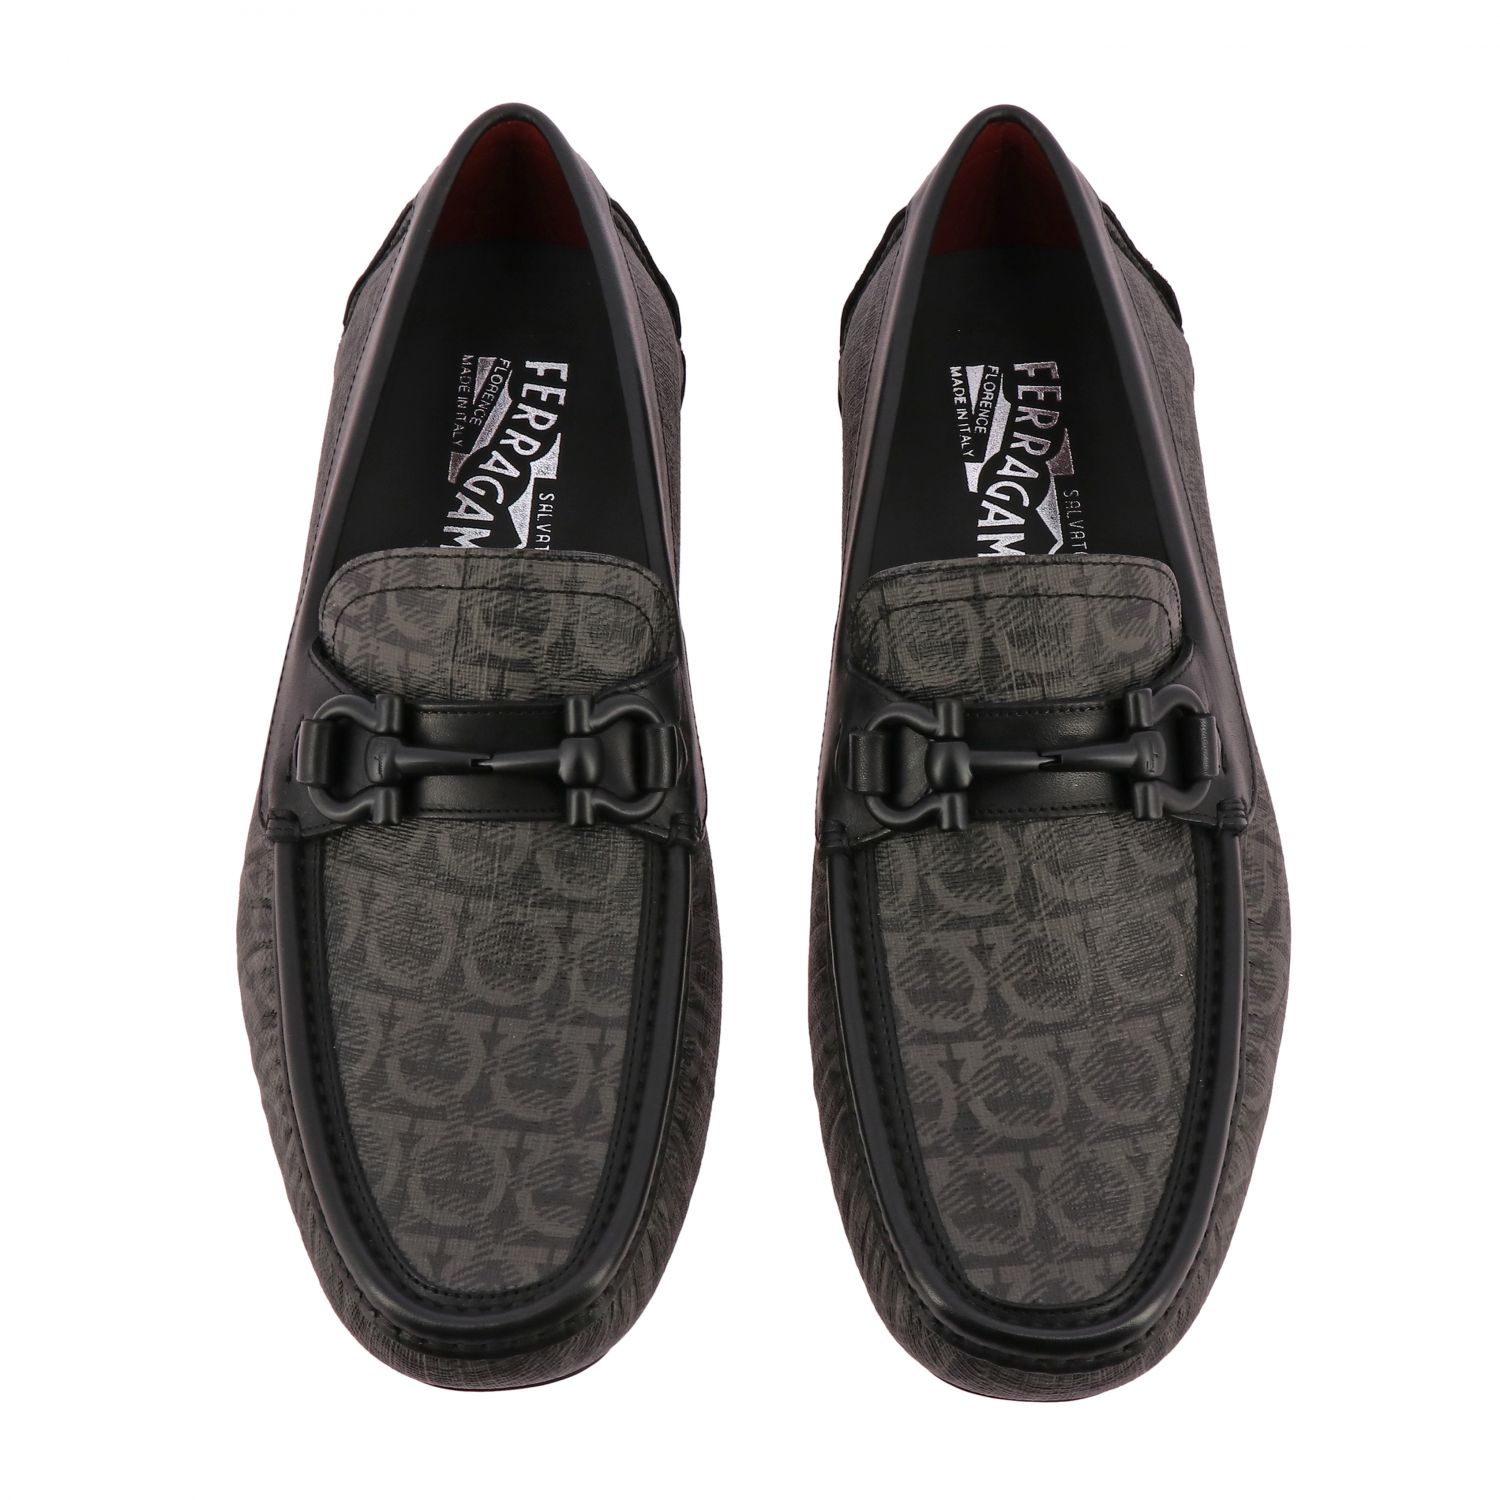 Shoes men Salvatore Ferragamo | Loafers Salvatore Ferragamo Men Black ...